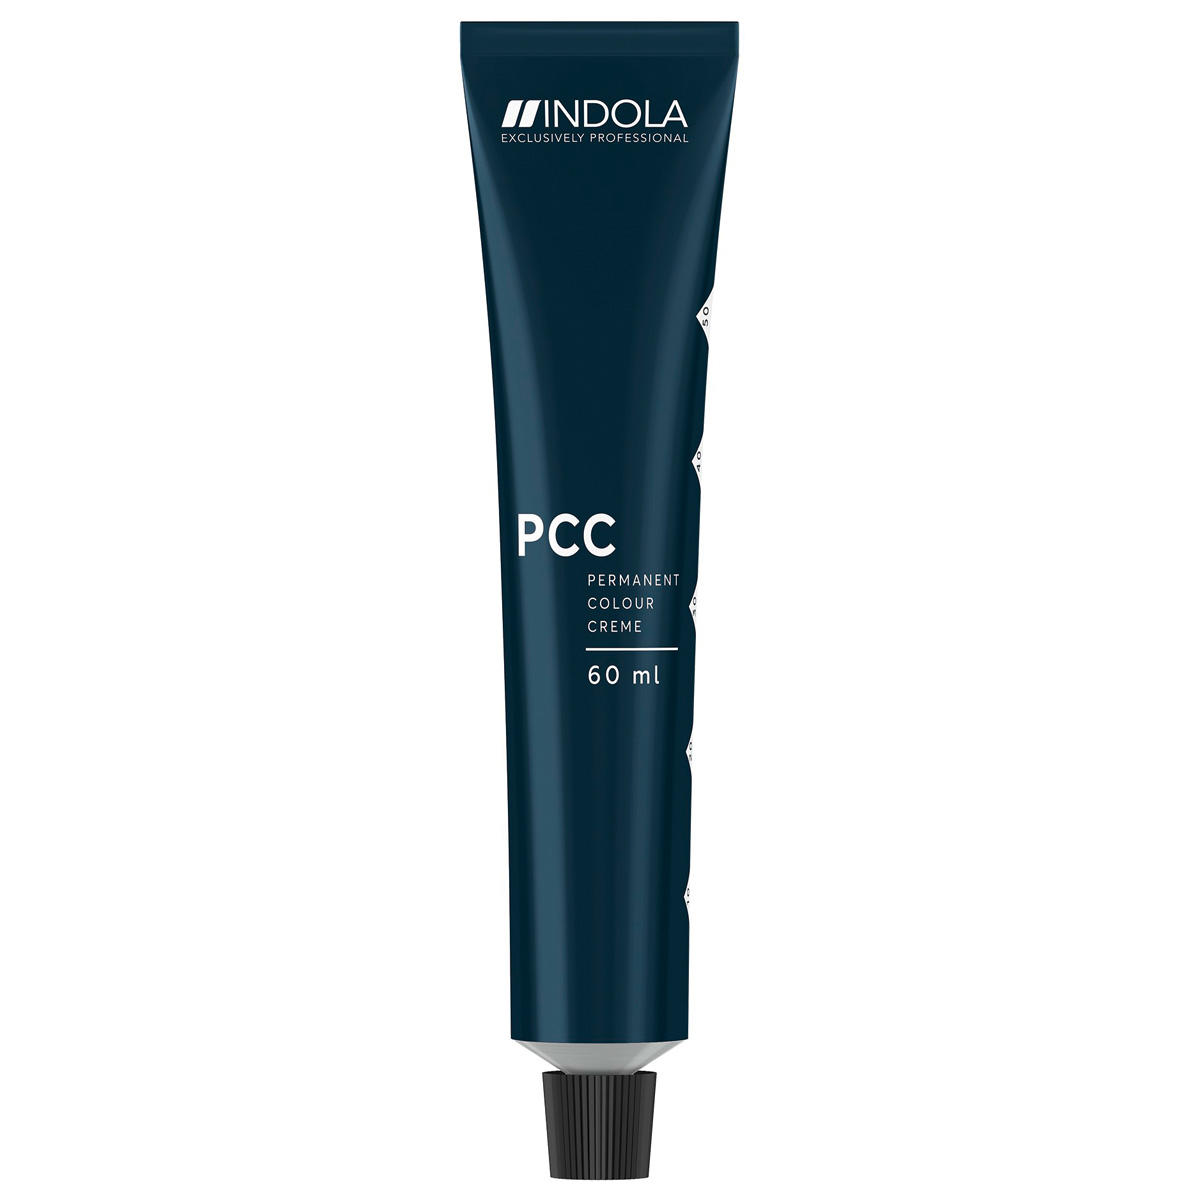 Indola PCC Permanent Colour Creme Intense Coverage 7.3+ blond moyen or naturel 60 ml - 1